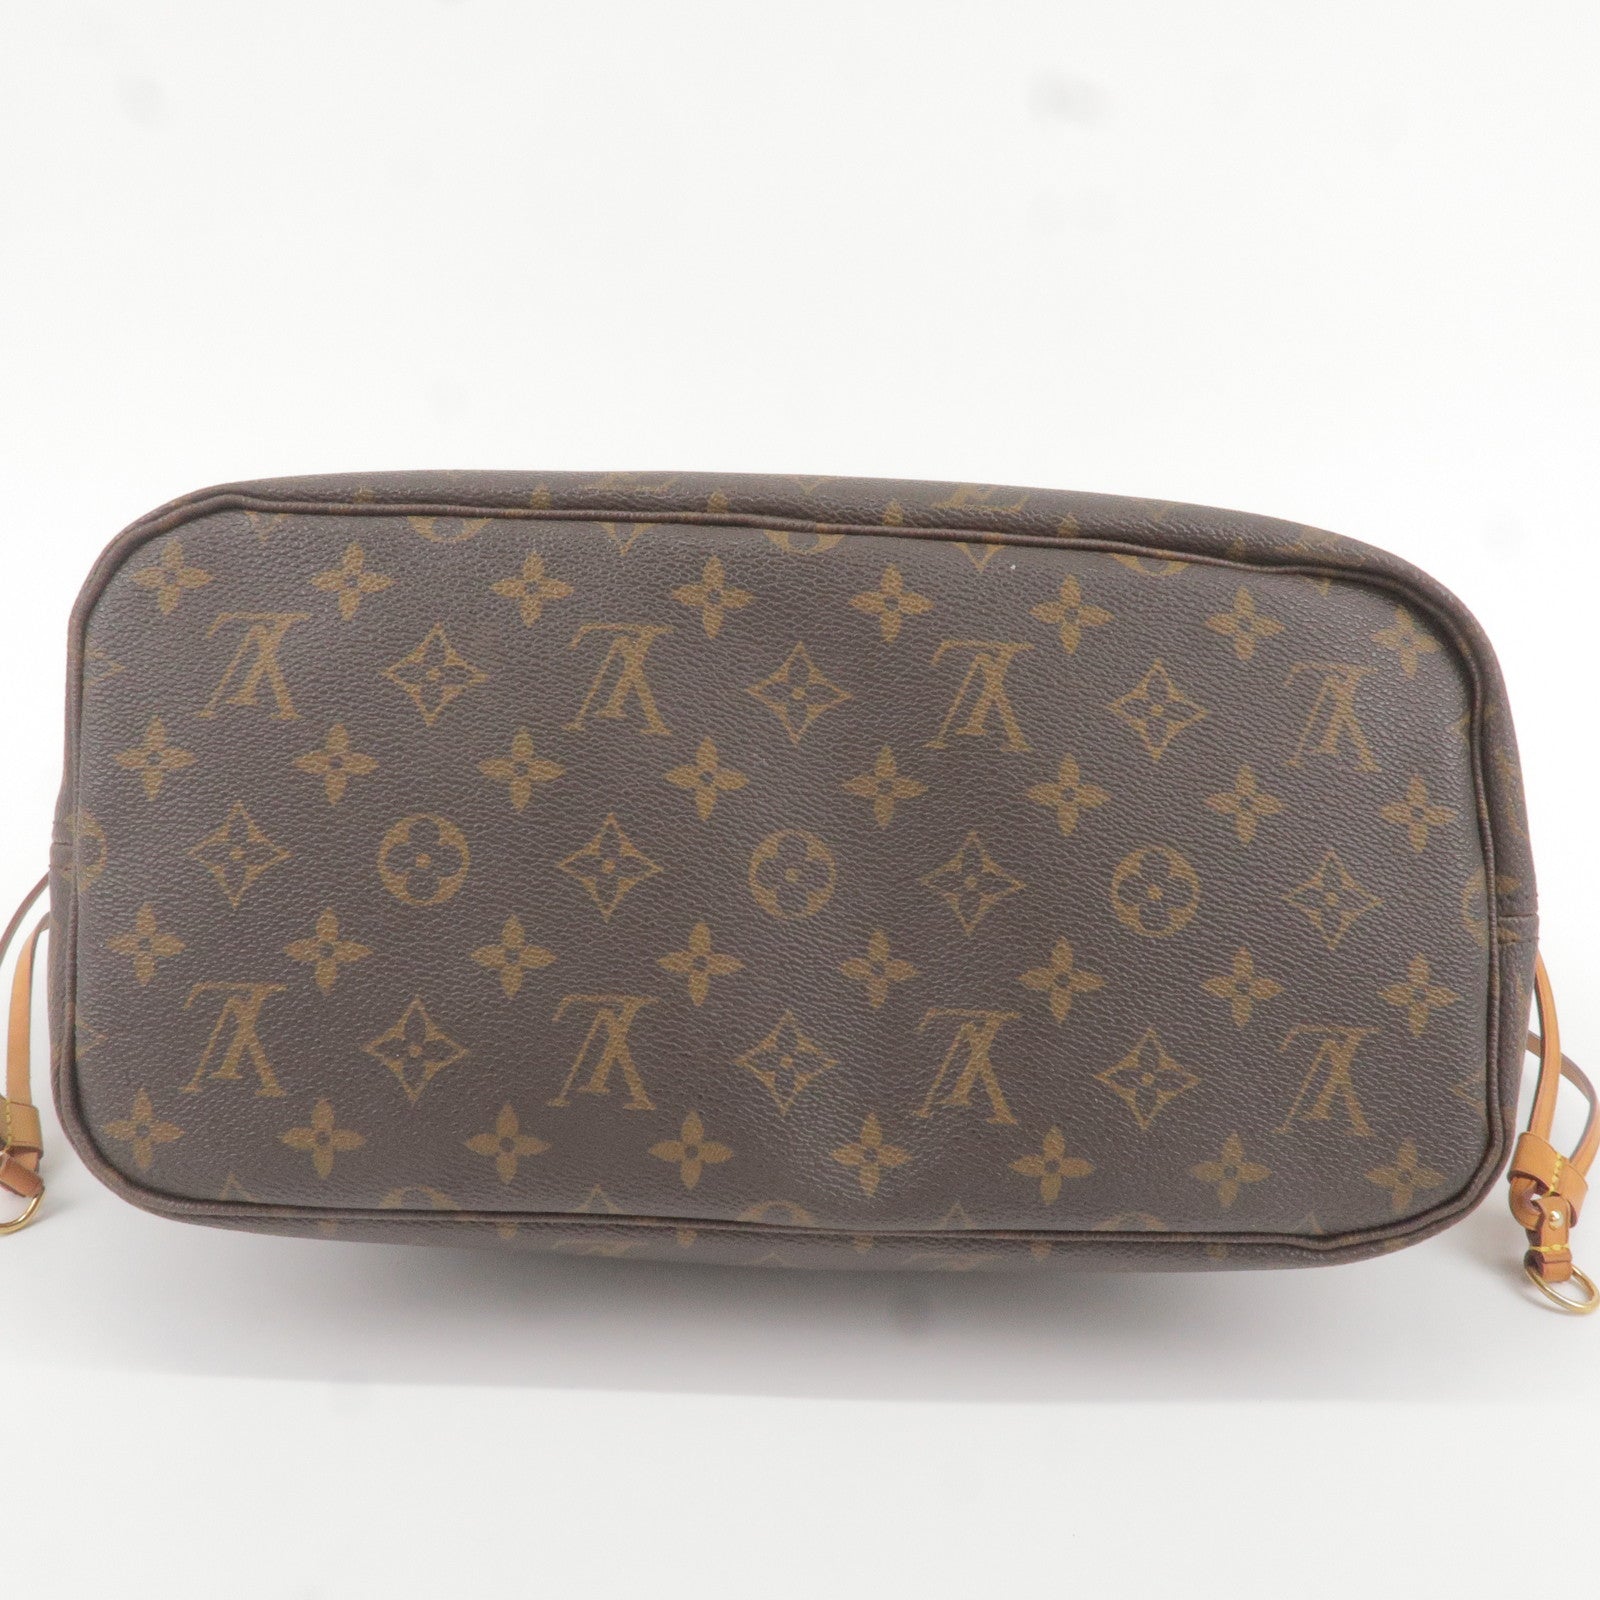 Louis Vuitton Tassel Bag Charm in Monogram Noir - SOLD